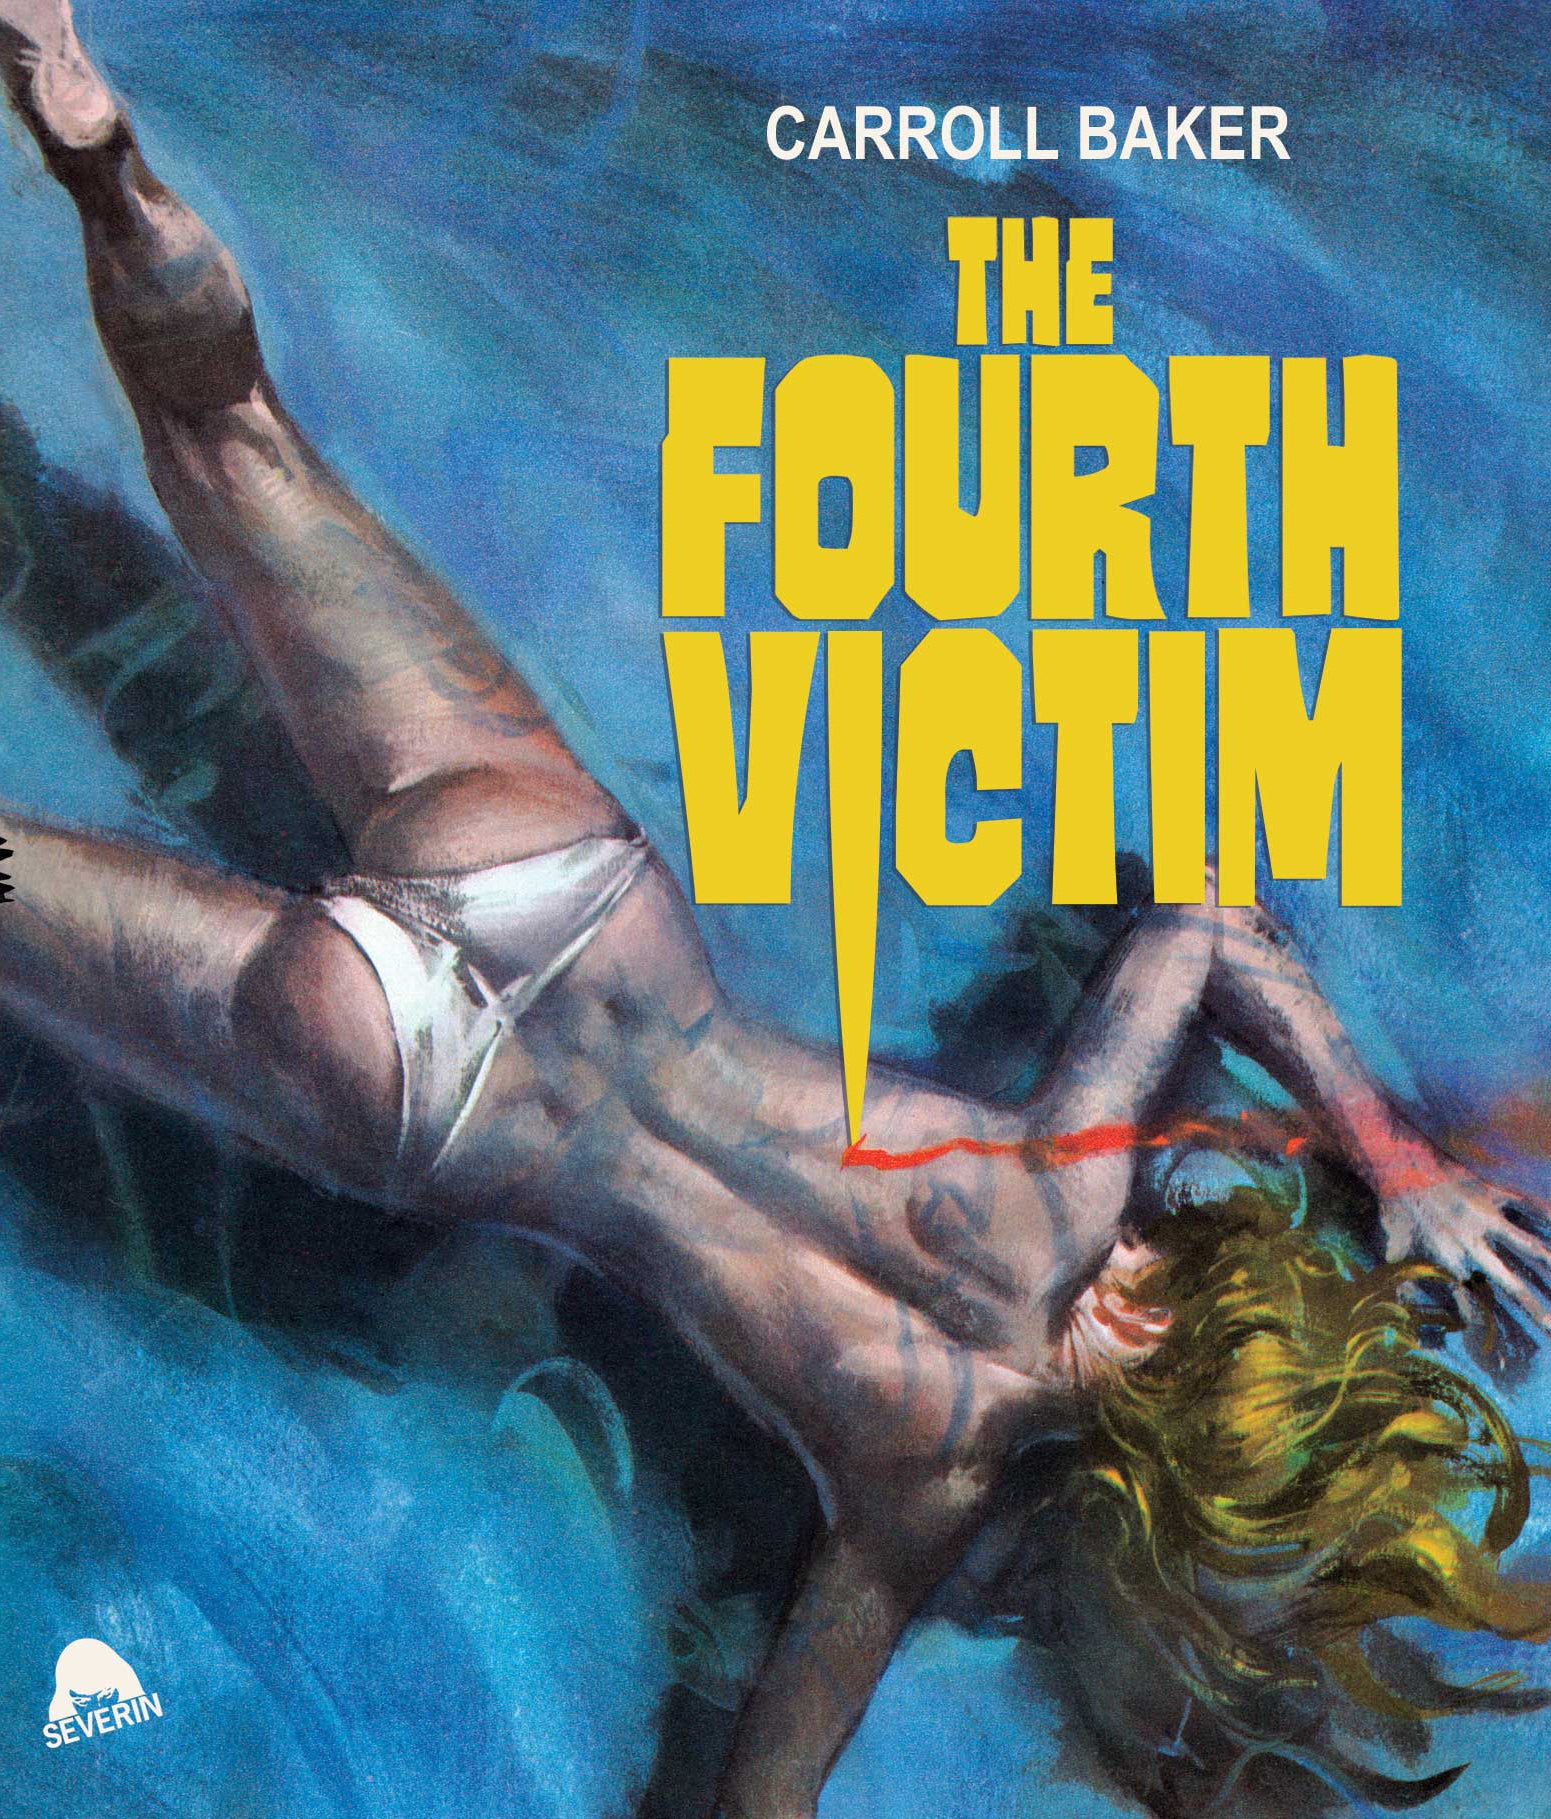 THE FOURTH VICTIM DVD